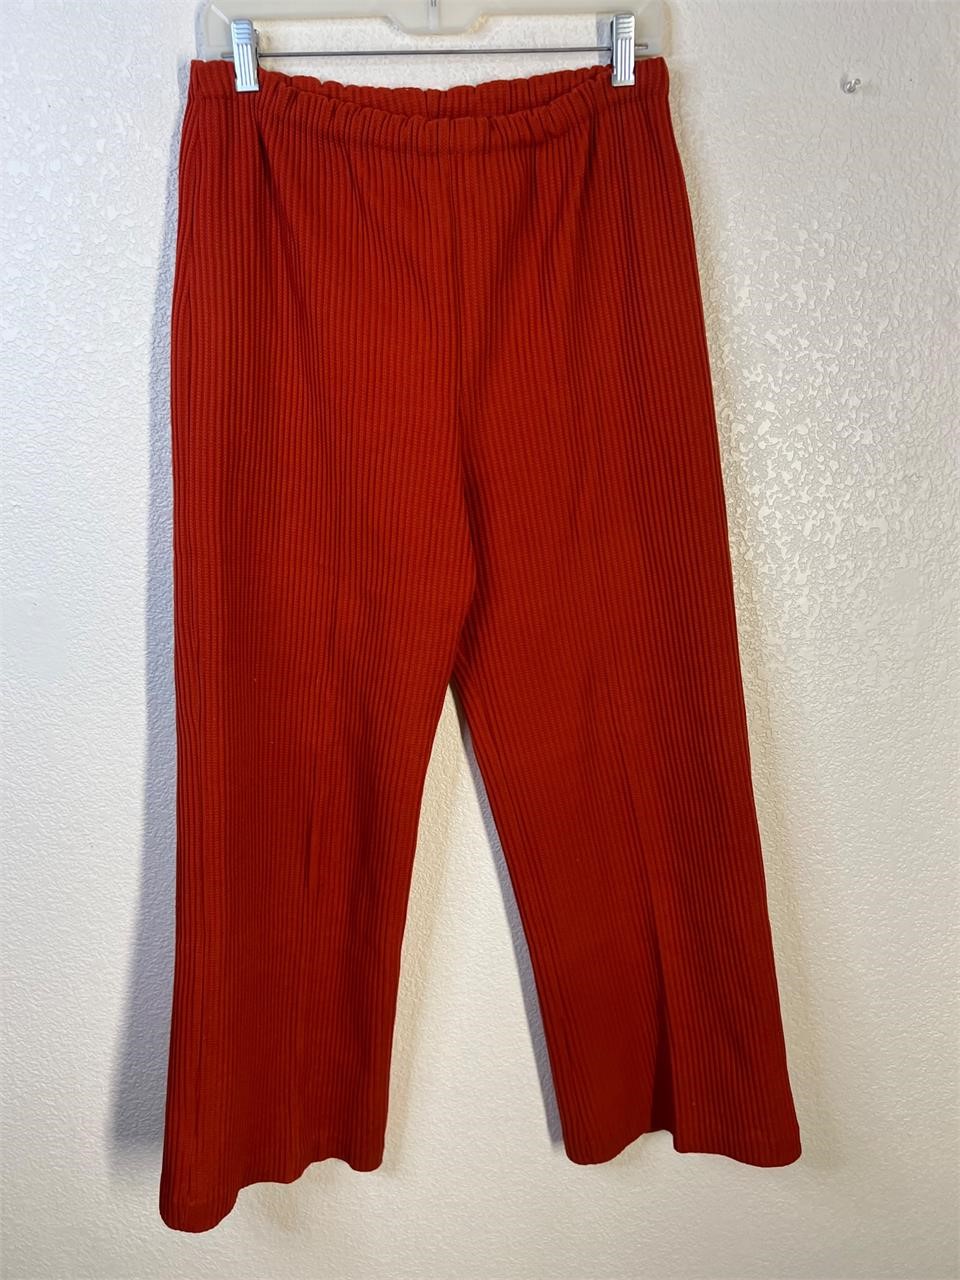 Vintage 1970’s West Set Orange Pants